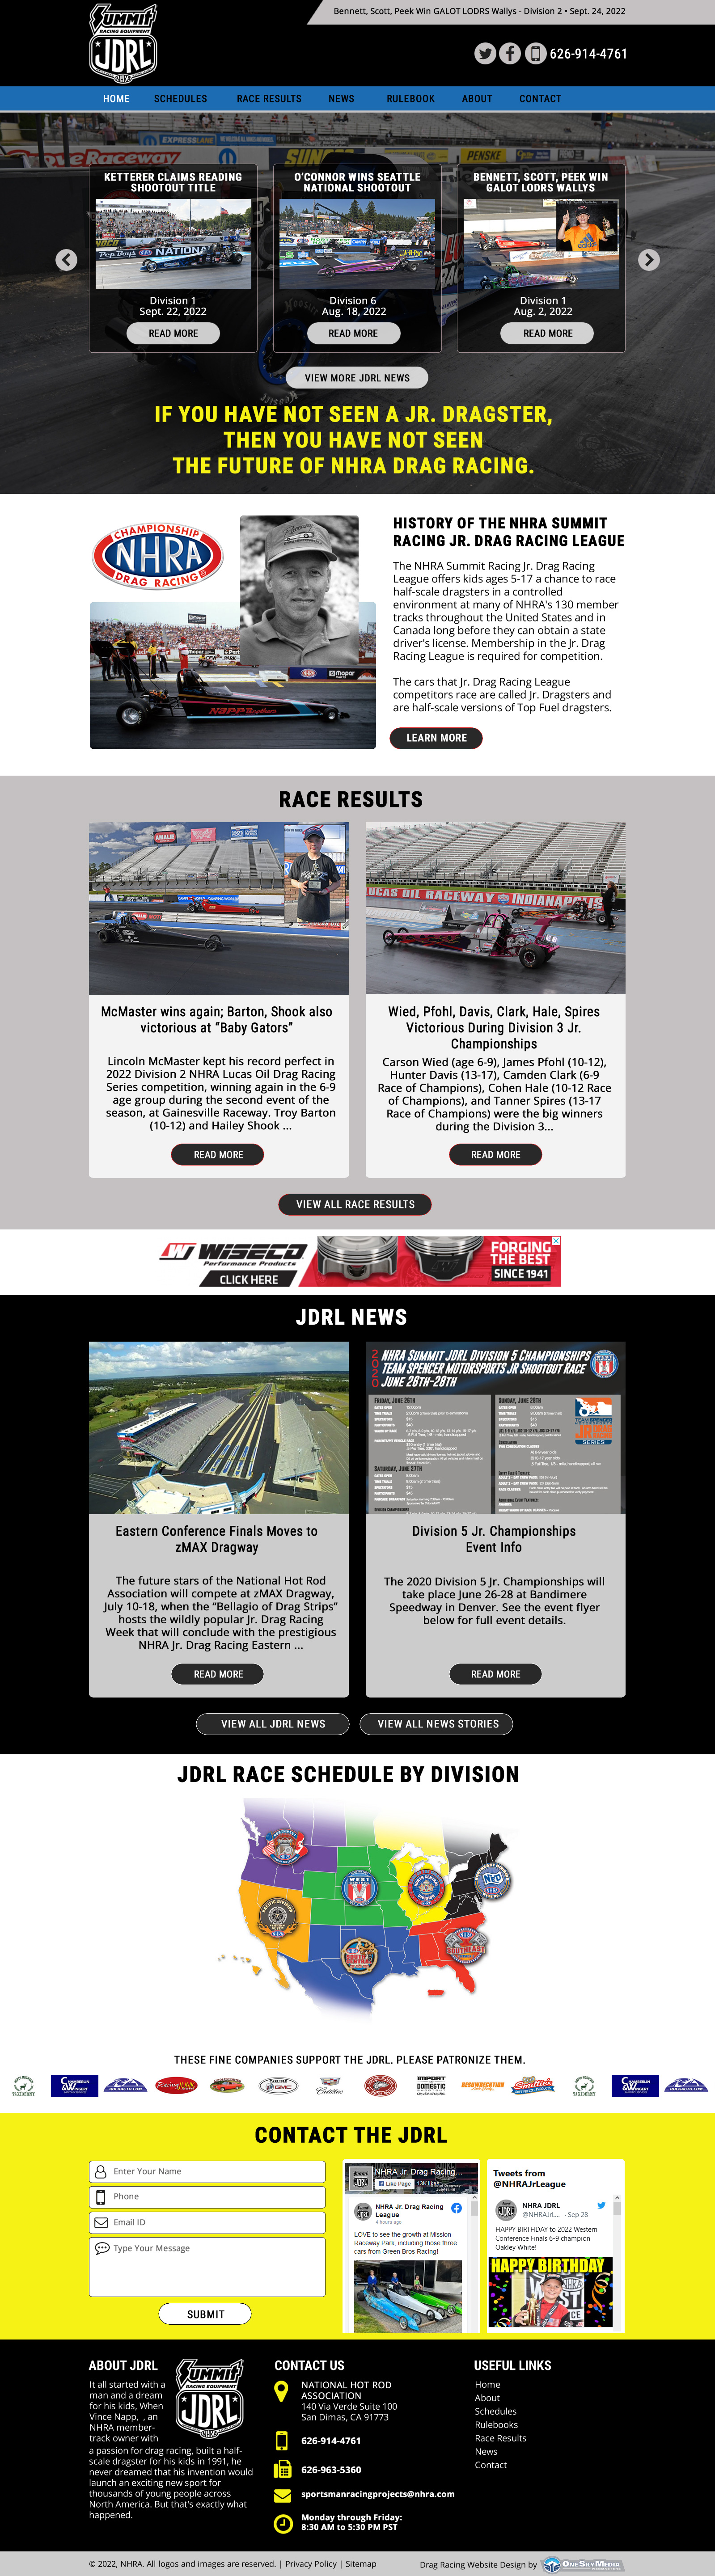 NHRA Junior Drag Racing League Website Design